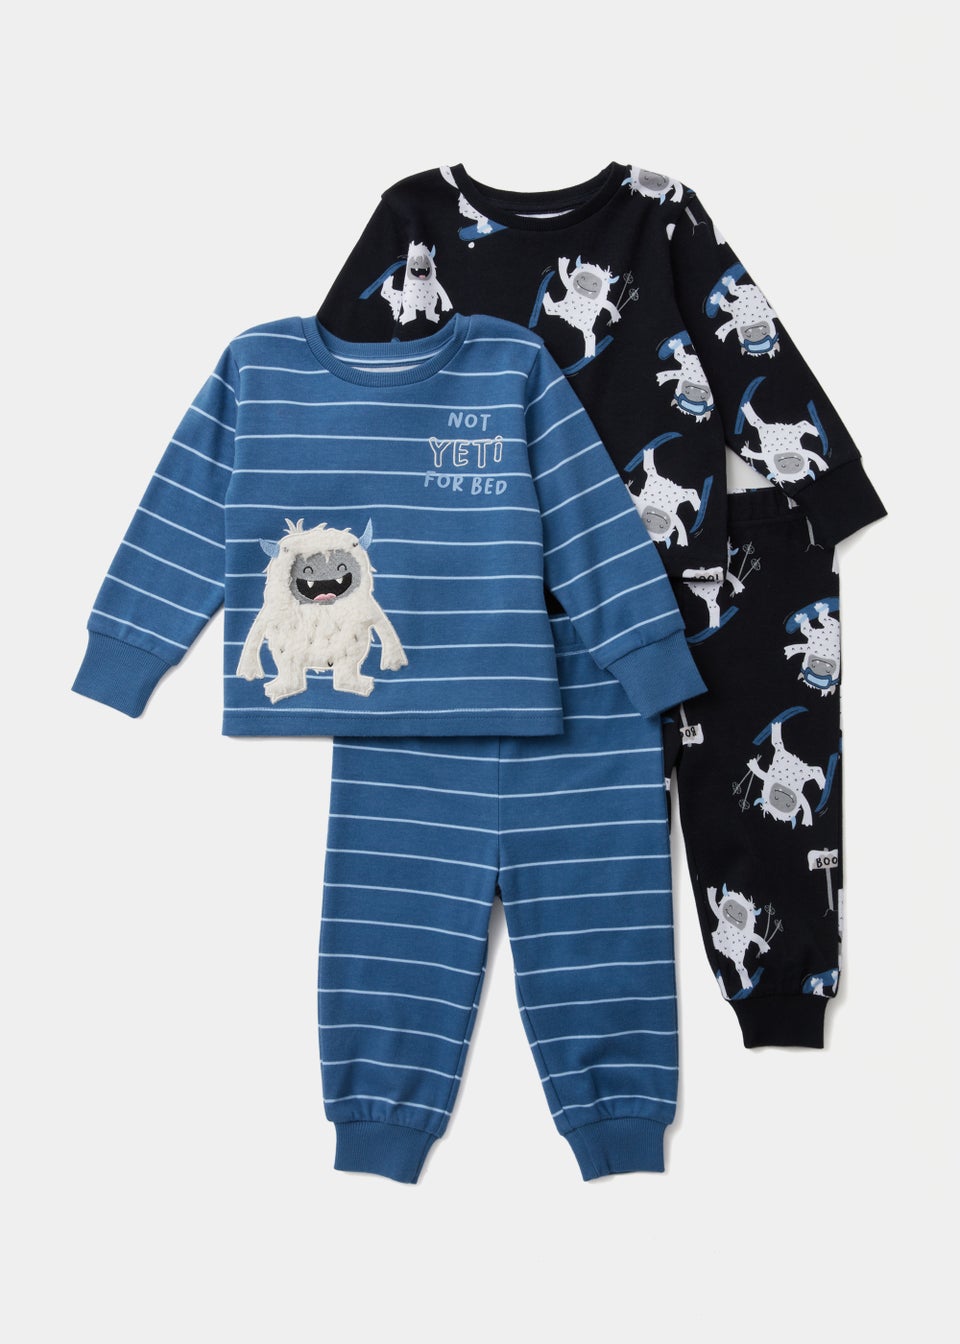 Boys 2 Pack Navy & Blue Yeti Pyjama Sets (9mths-5yrs)